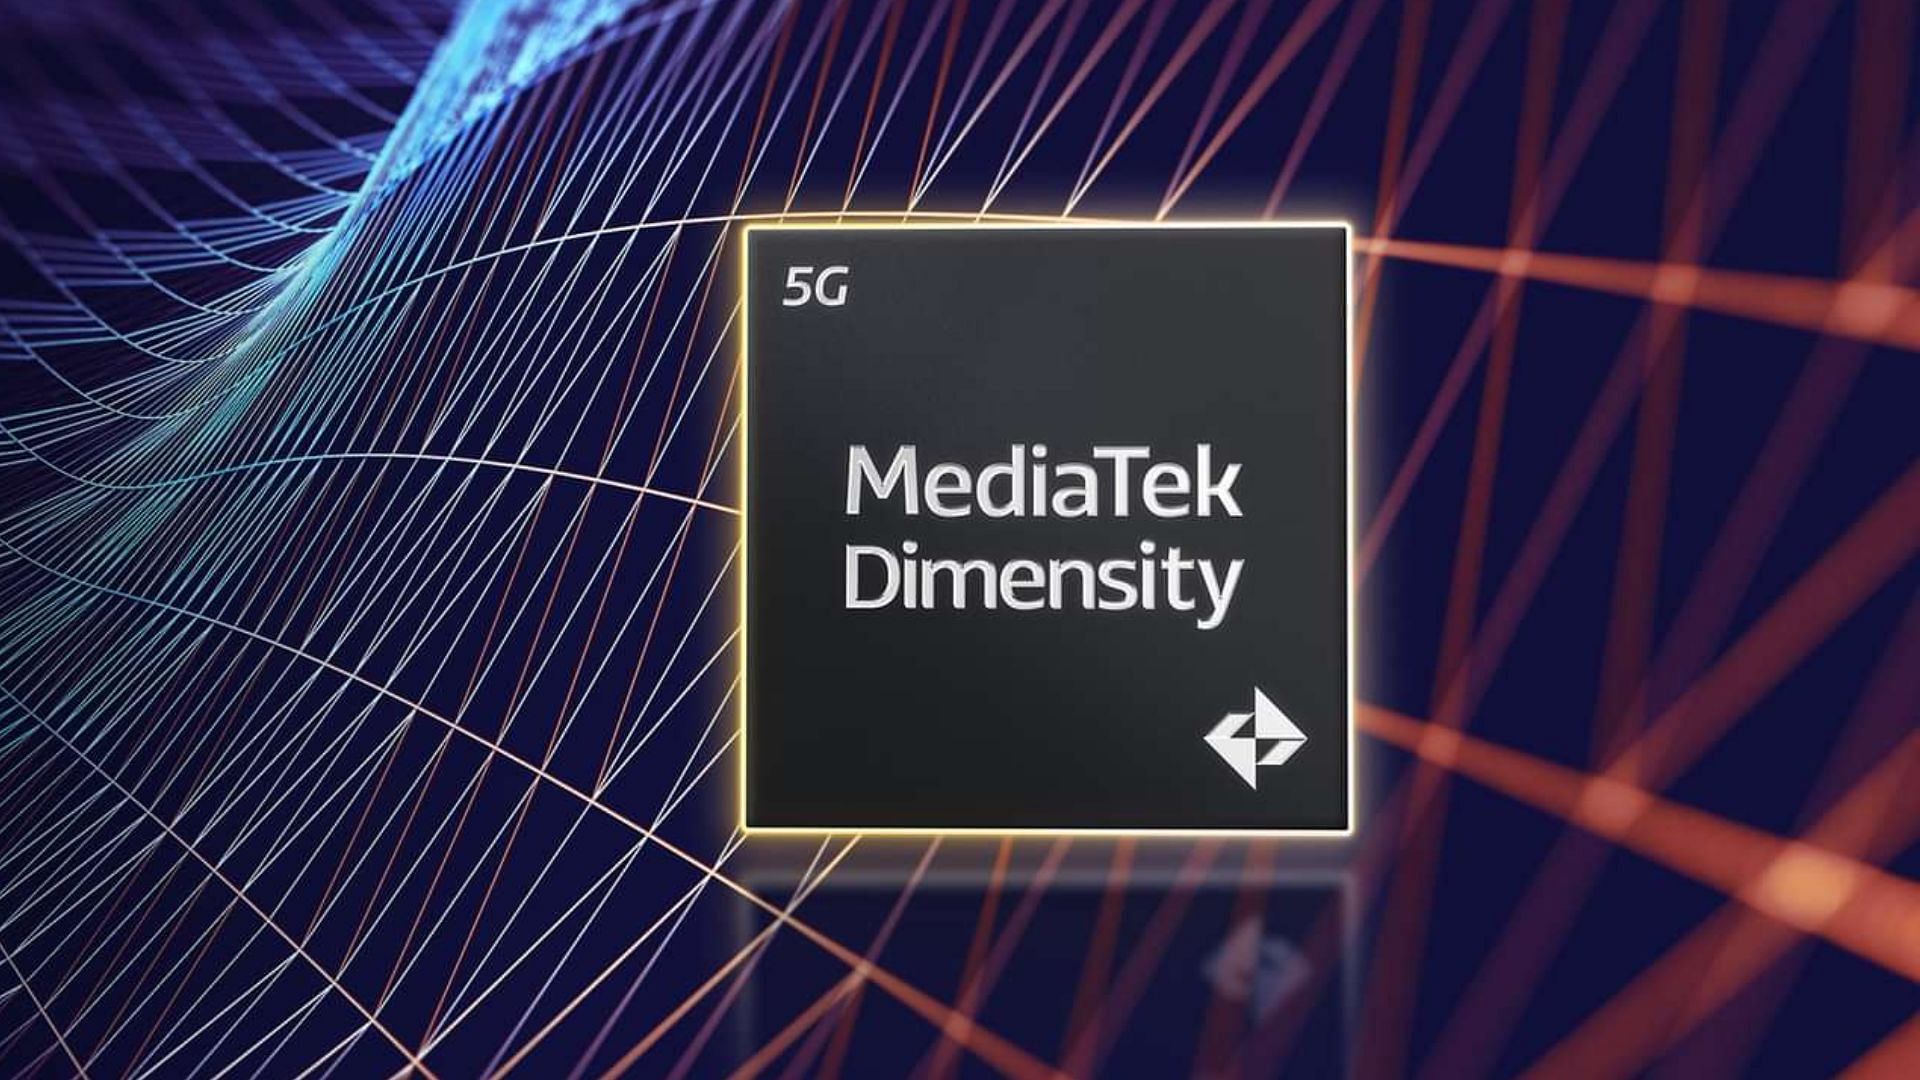 MediaTek Dimensity is a better processor for gaming (Image via MediaTek)